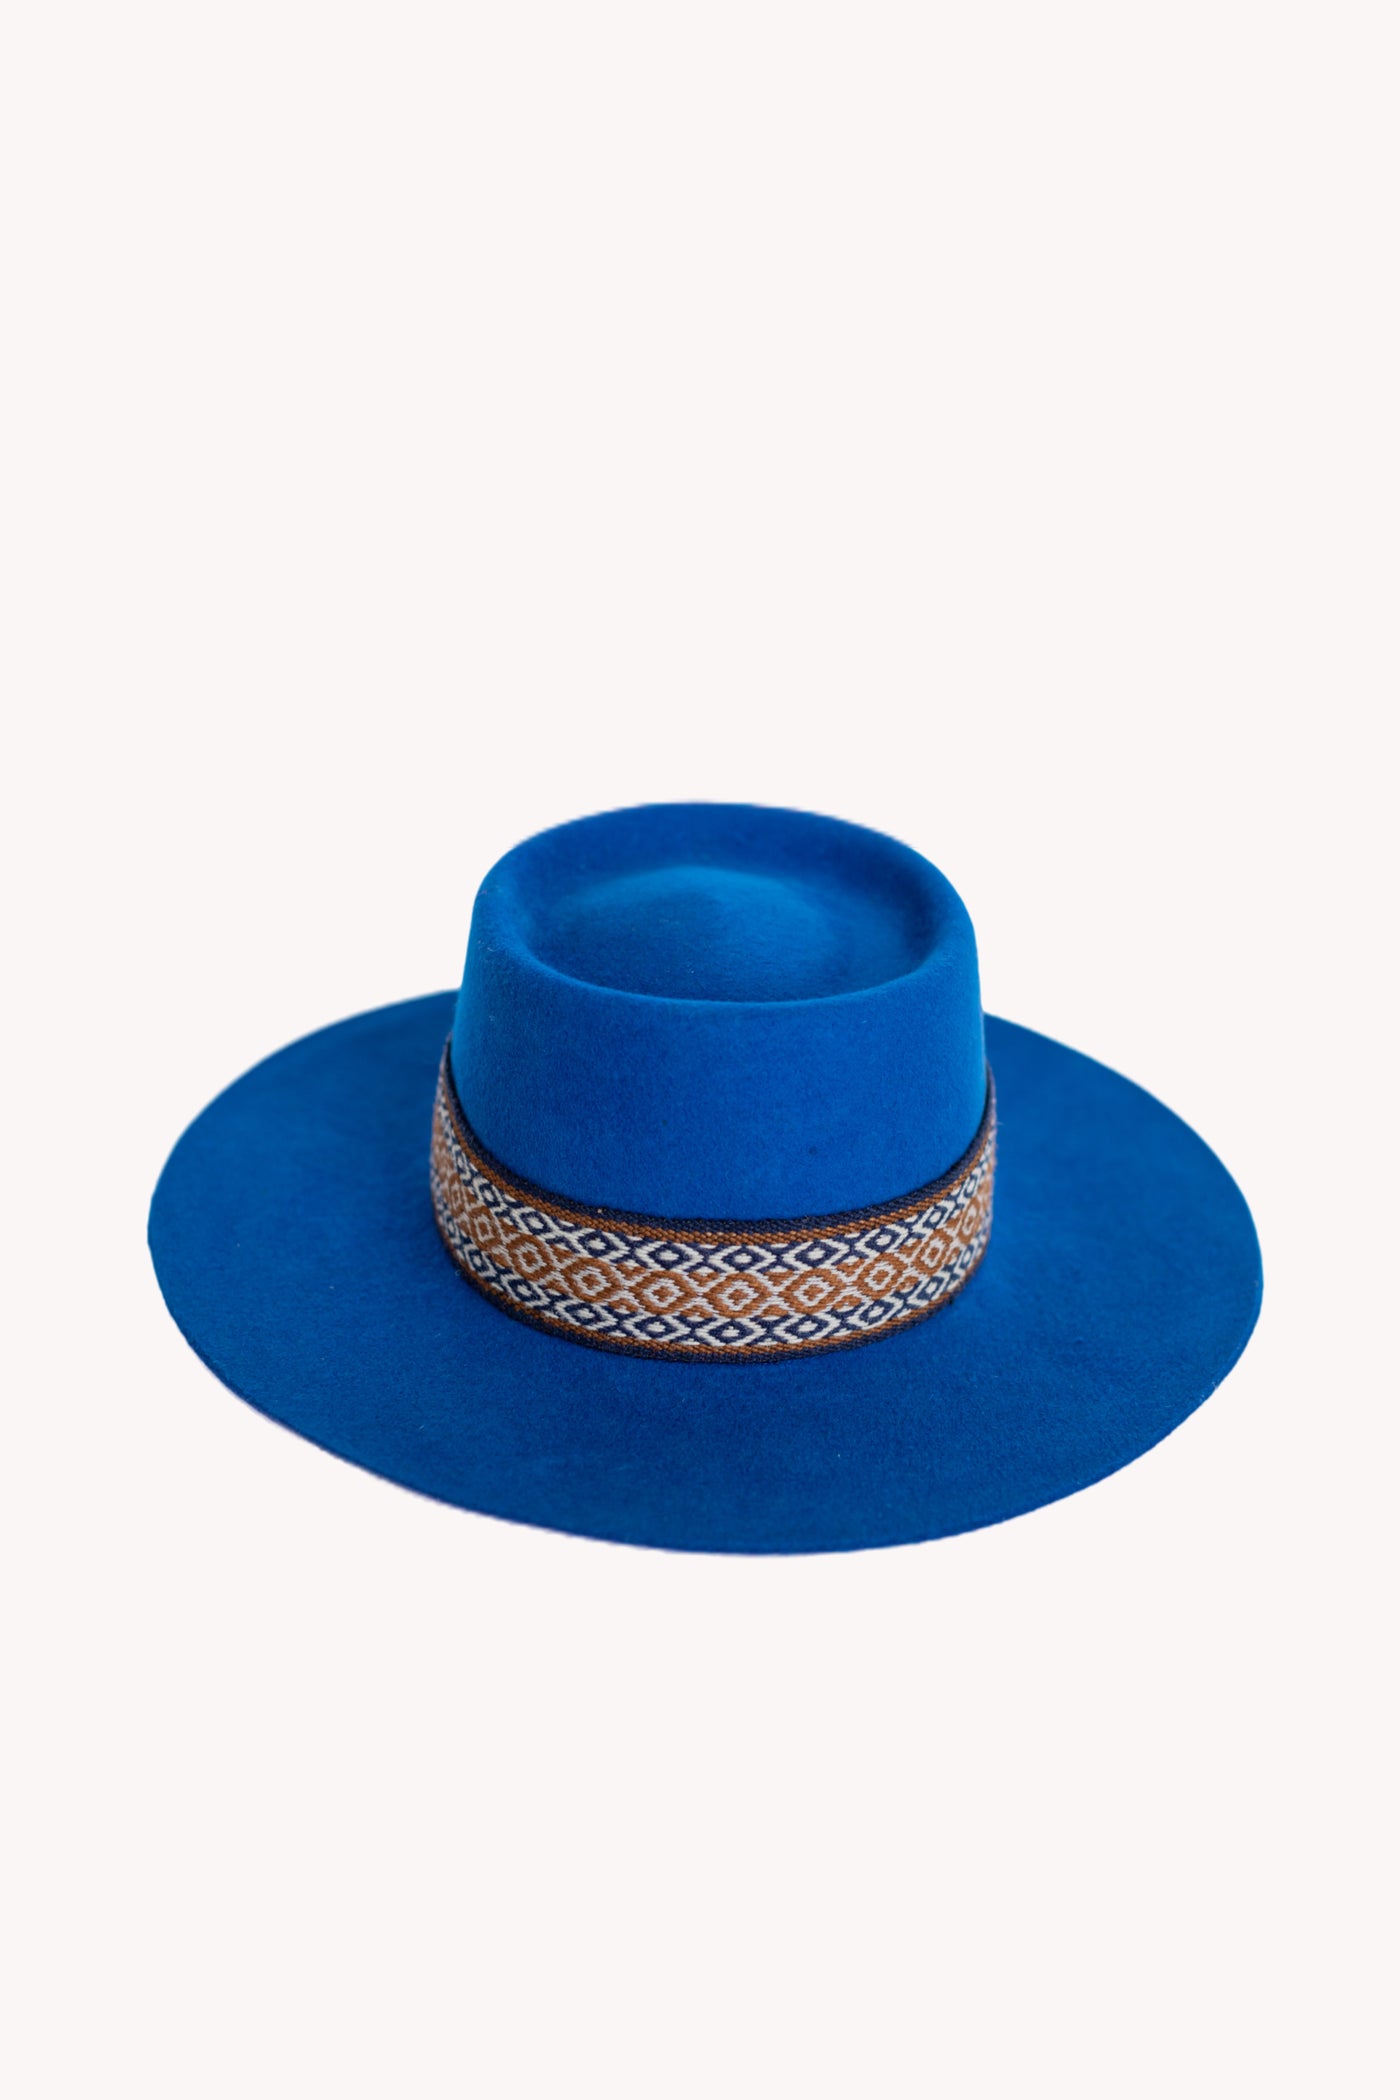 Blue Bucket style alpaca wool artisan hat